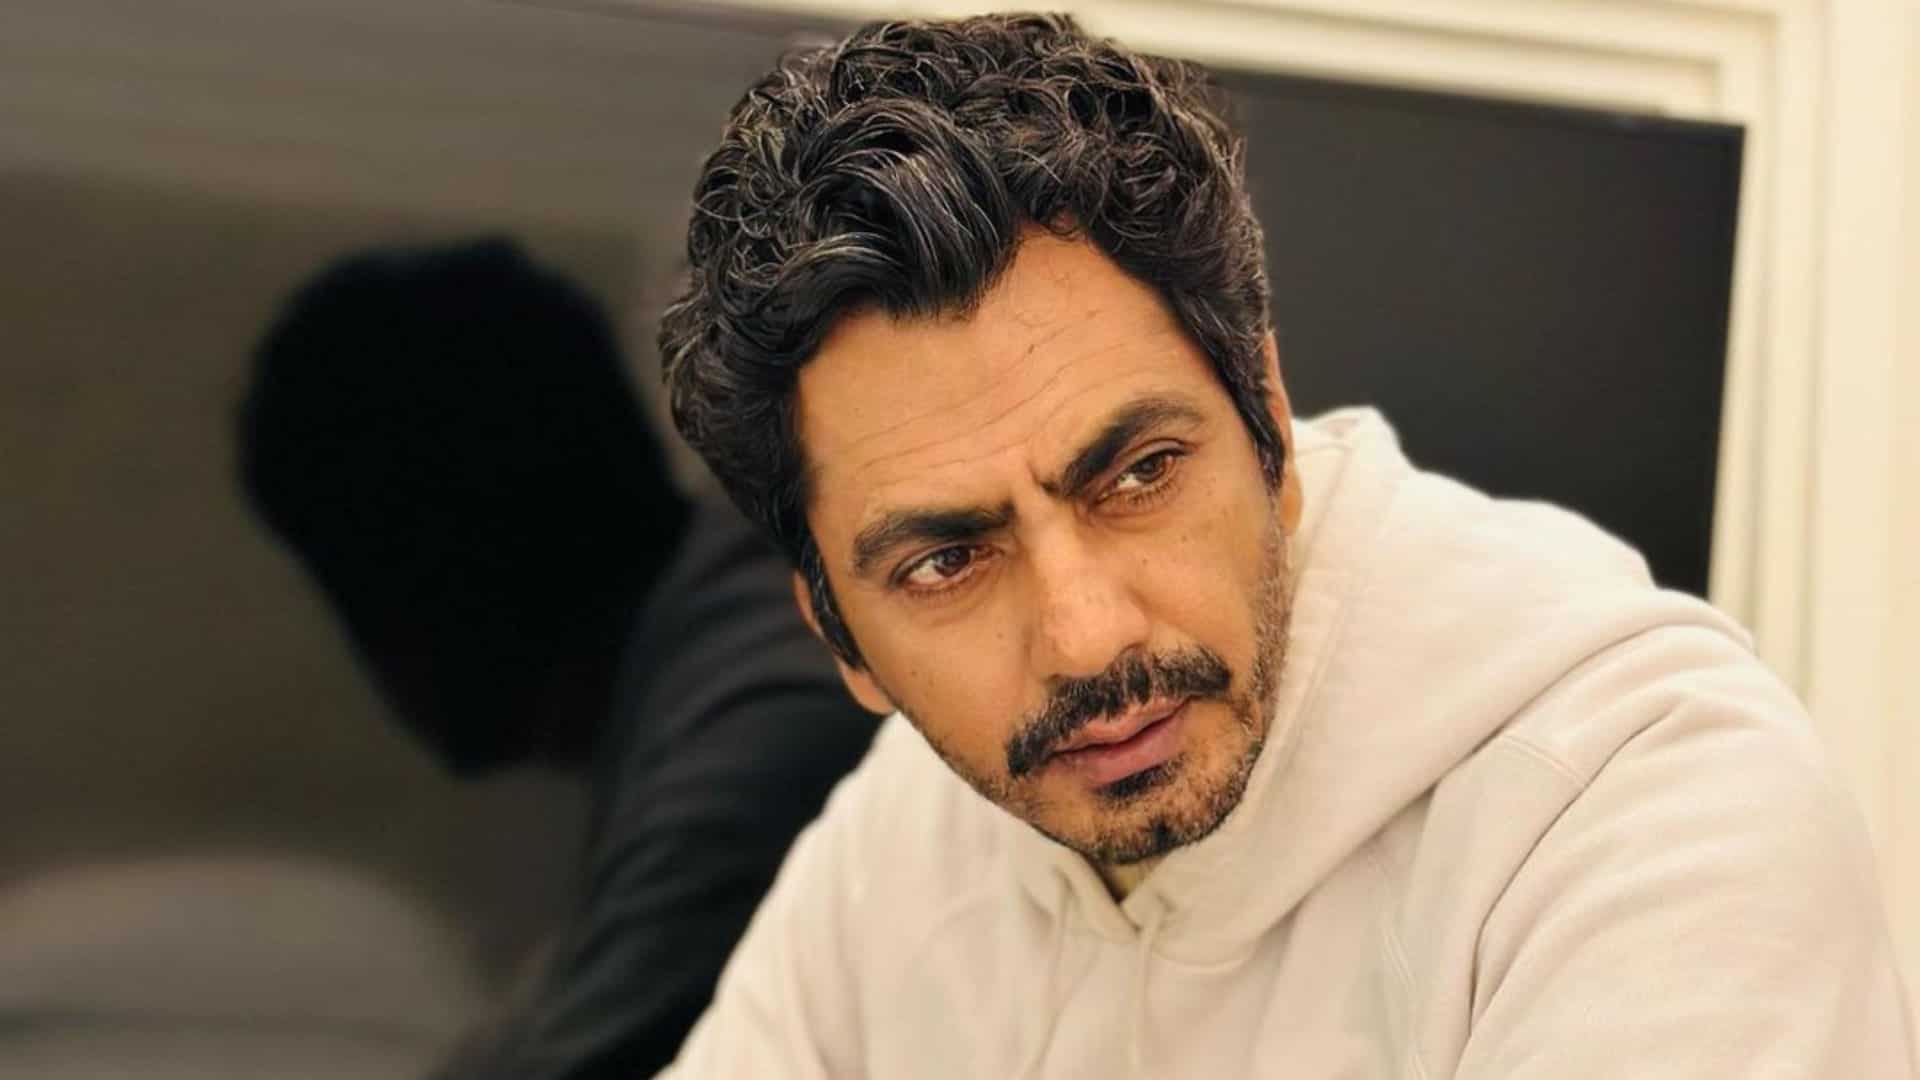 Good looks can make you hero, not actor: Nawazuddin